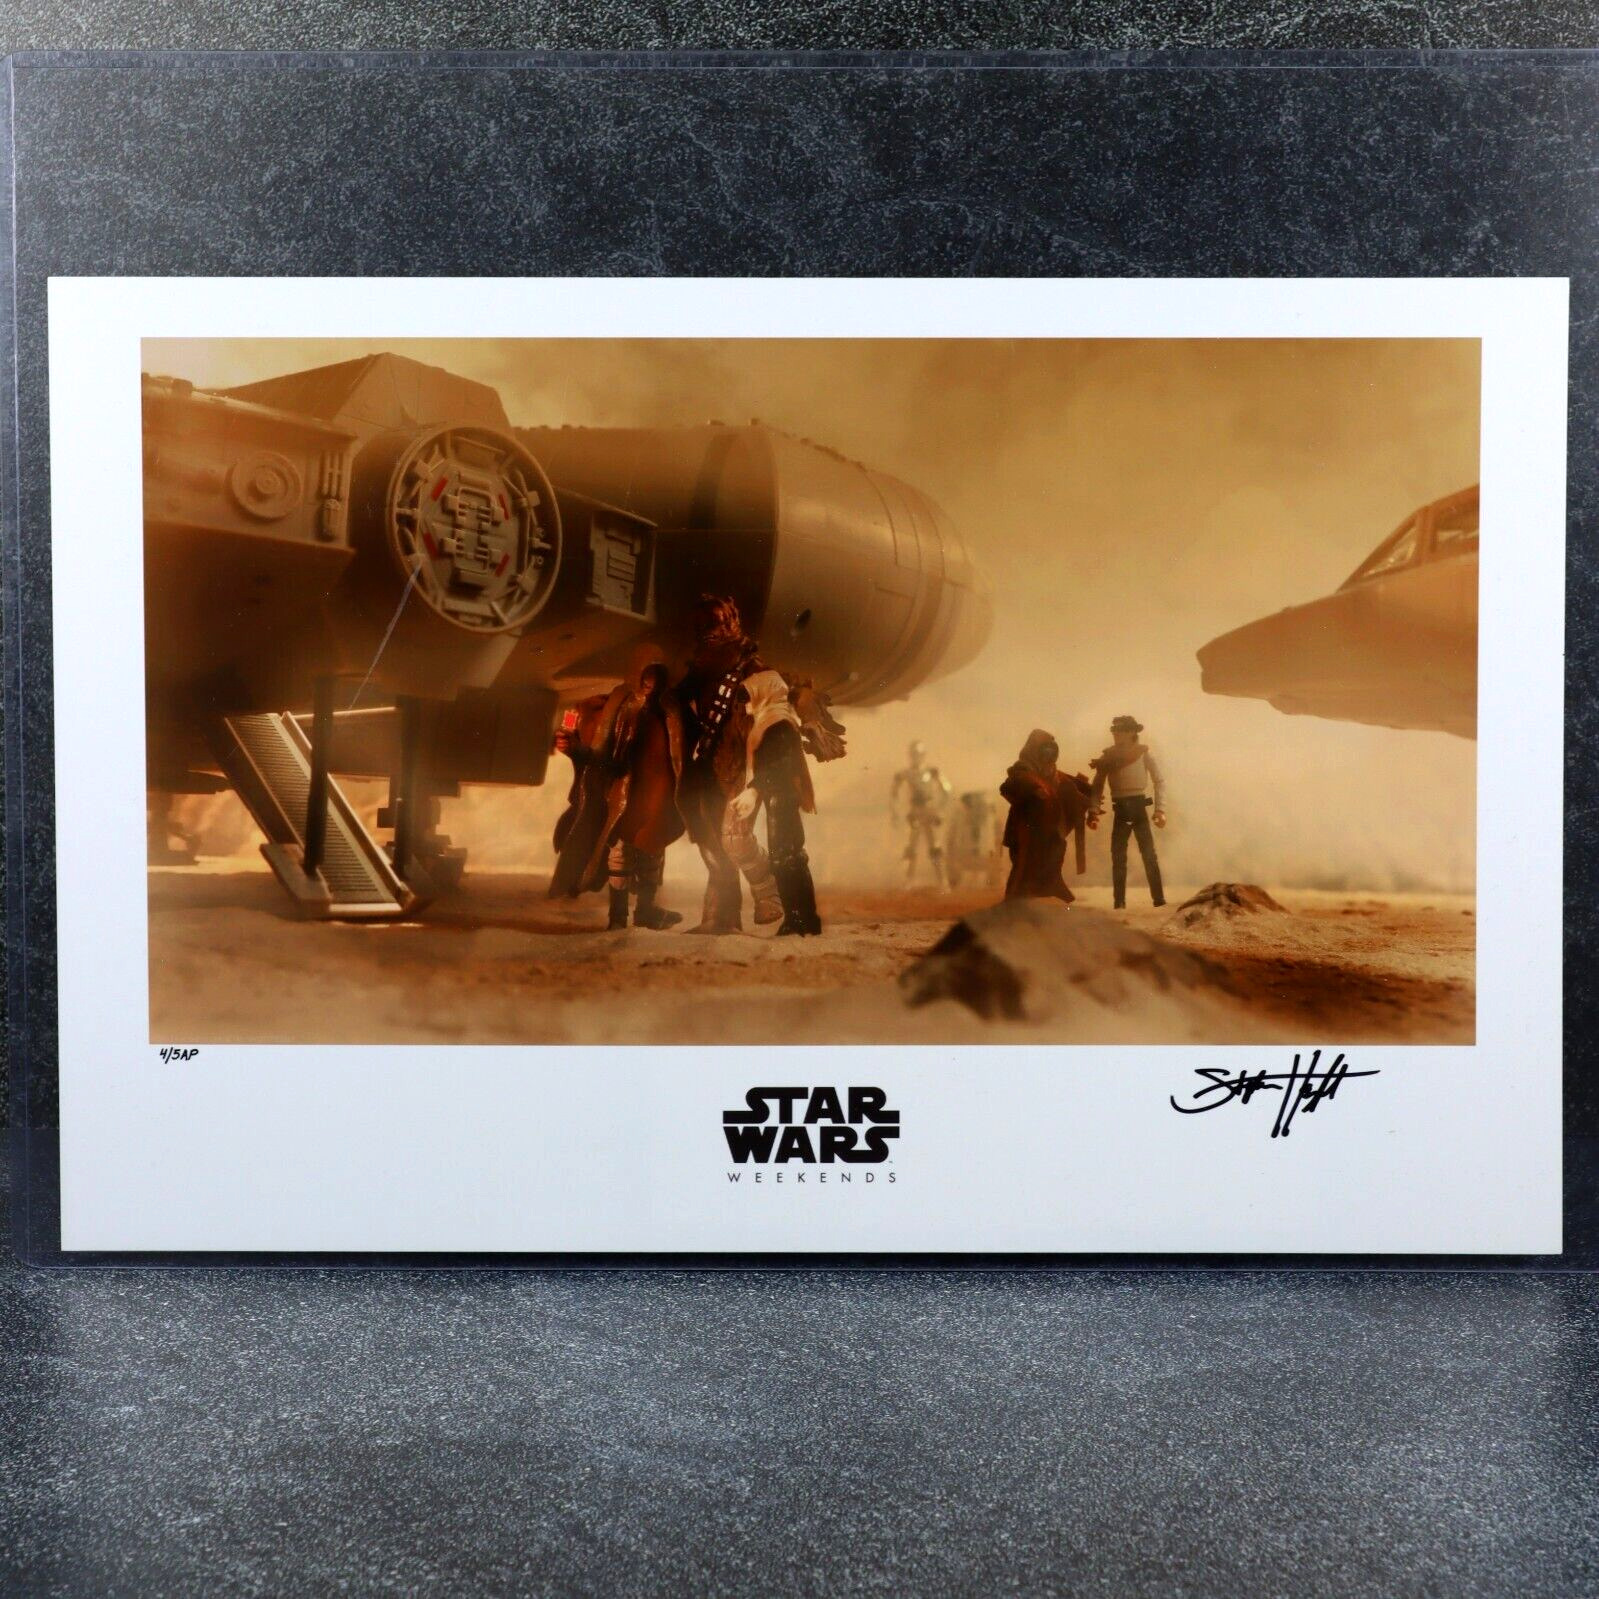 Star Wars Weekends 2013 Sandstorm Art Giclee LE 4/5AP Signed Stephen Hayford COA